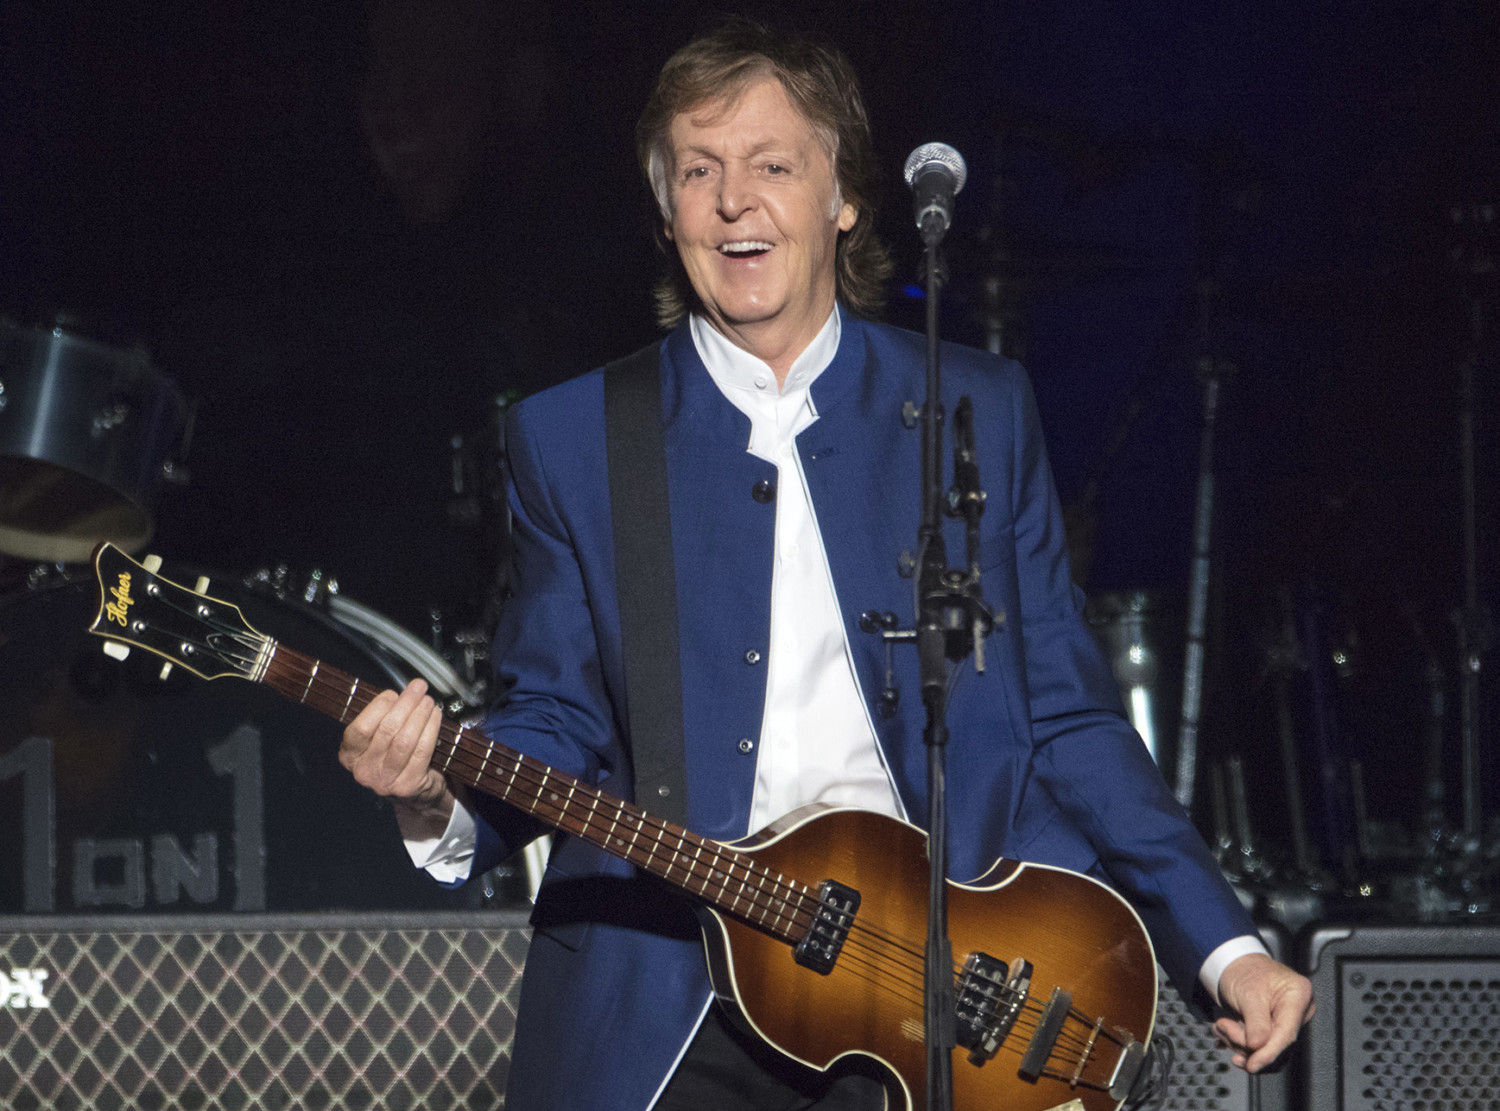 Paul McCartney performs in Tampa, Florida, in 2017